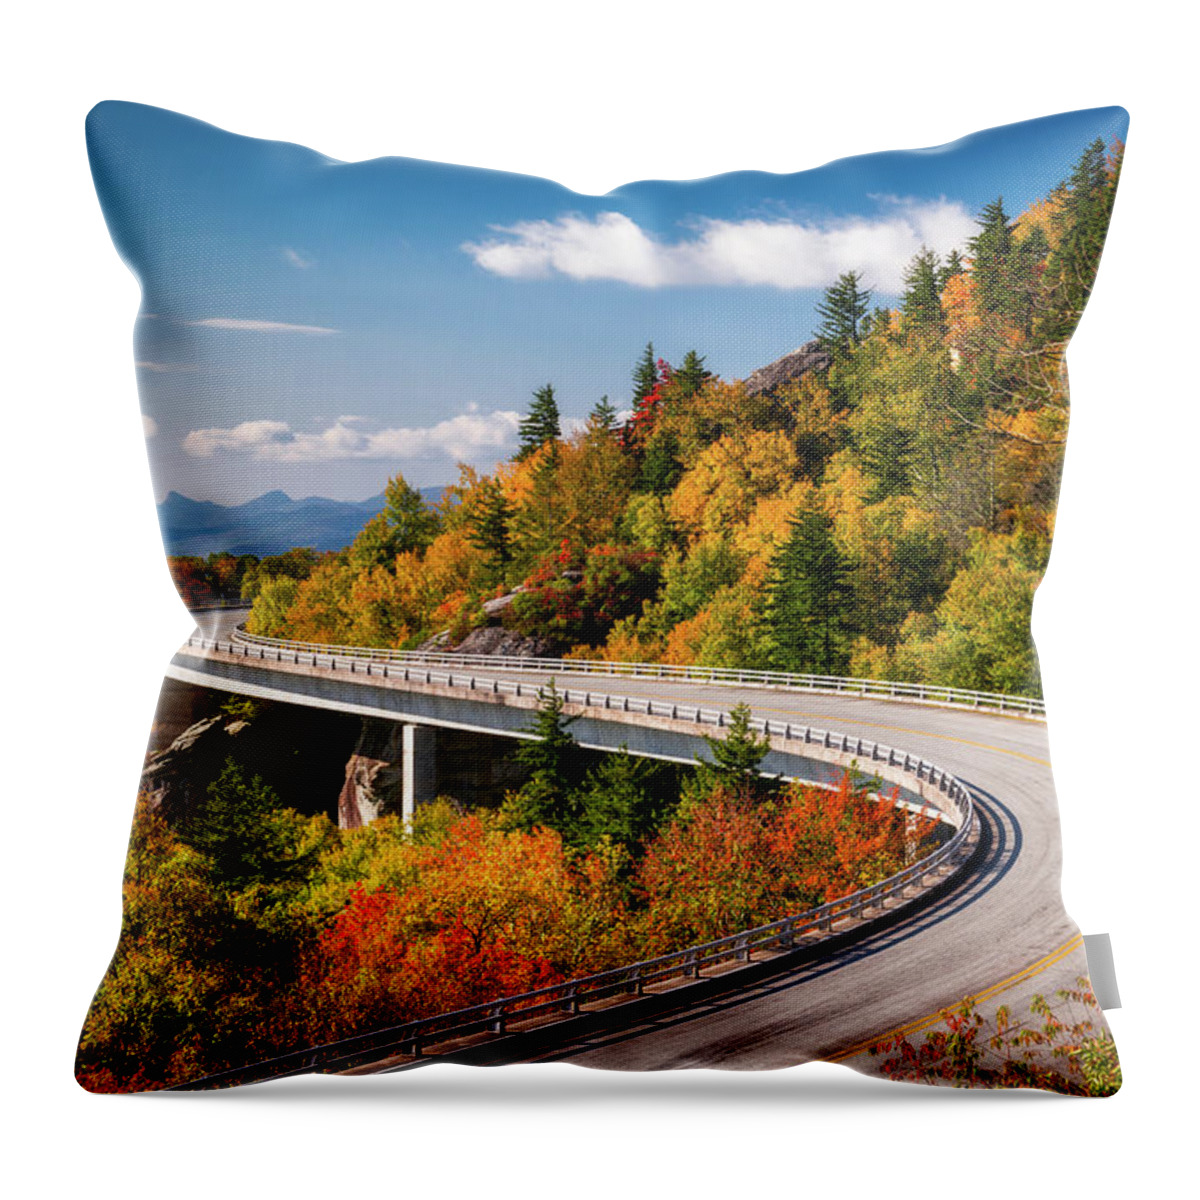 Linn Cove Viaduct Throw Pillow featuring the photograph Blue Ridge Parkway Linn Cove Viaduct - North Carolina by Dave Allen